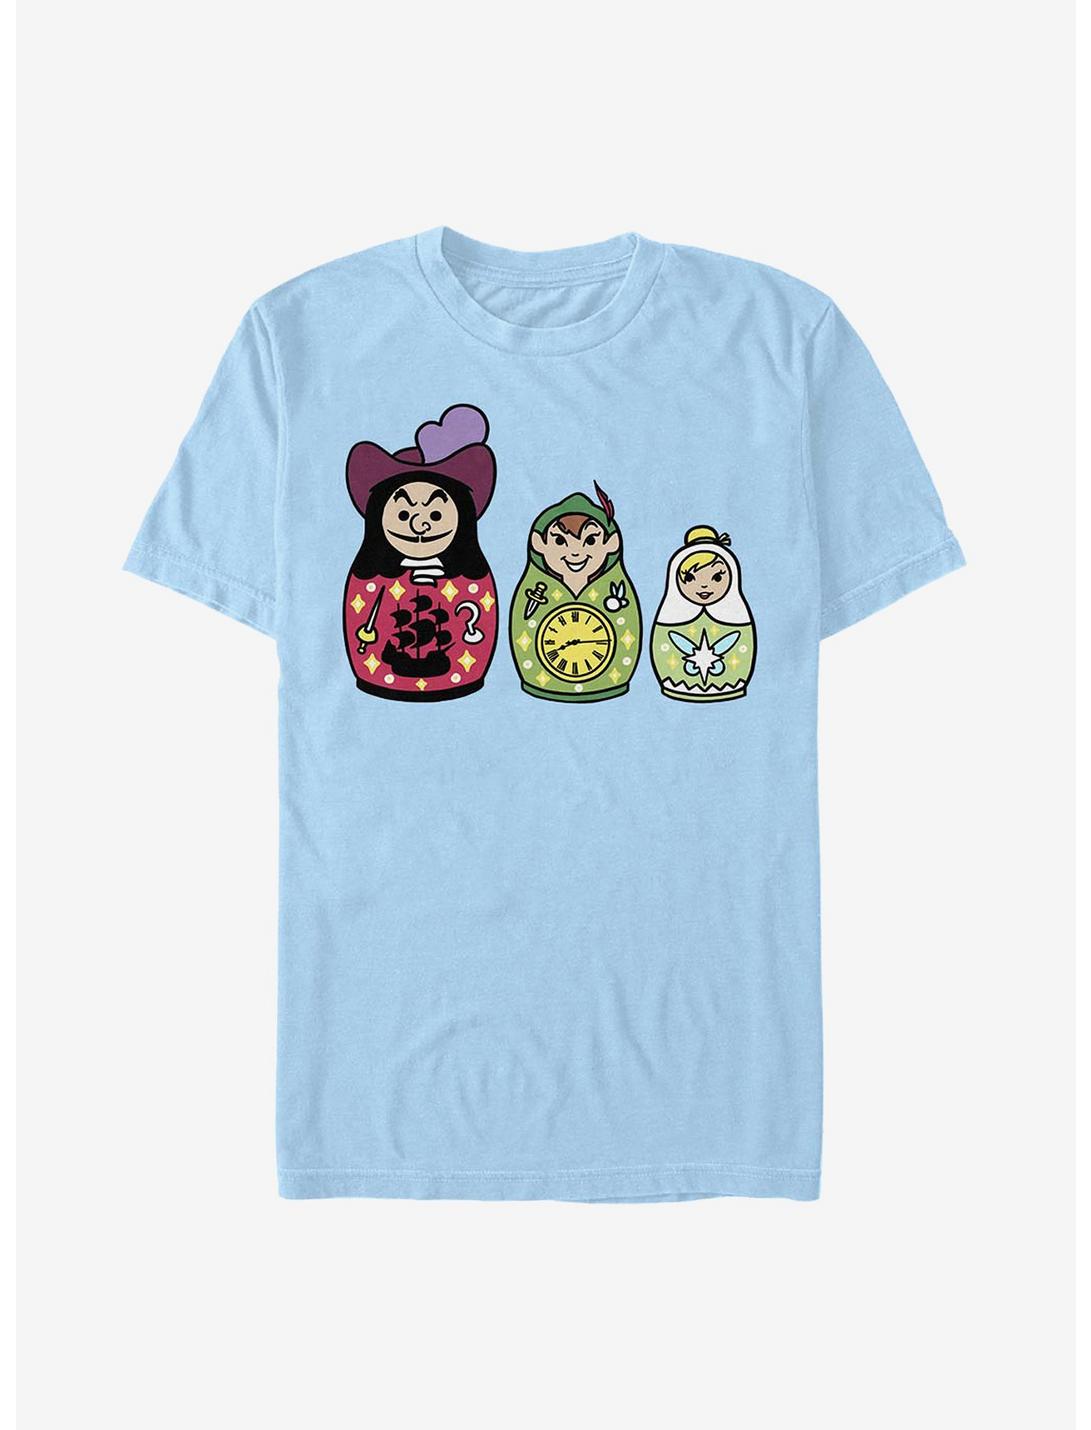 Disney Peter Pan Matryoshka Pan T-Shirt, LT BLUE, hi-res